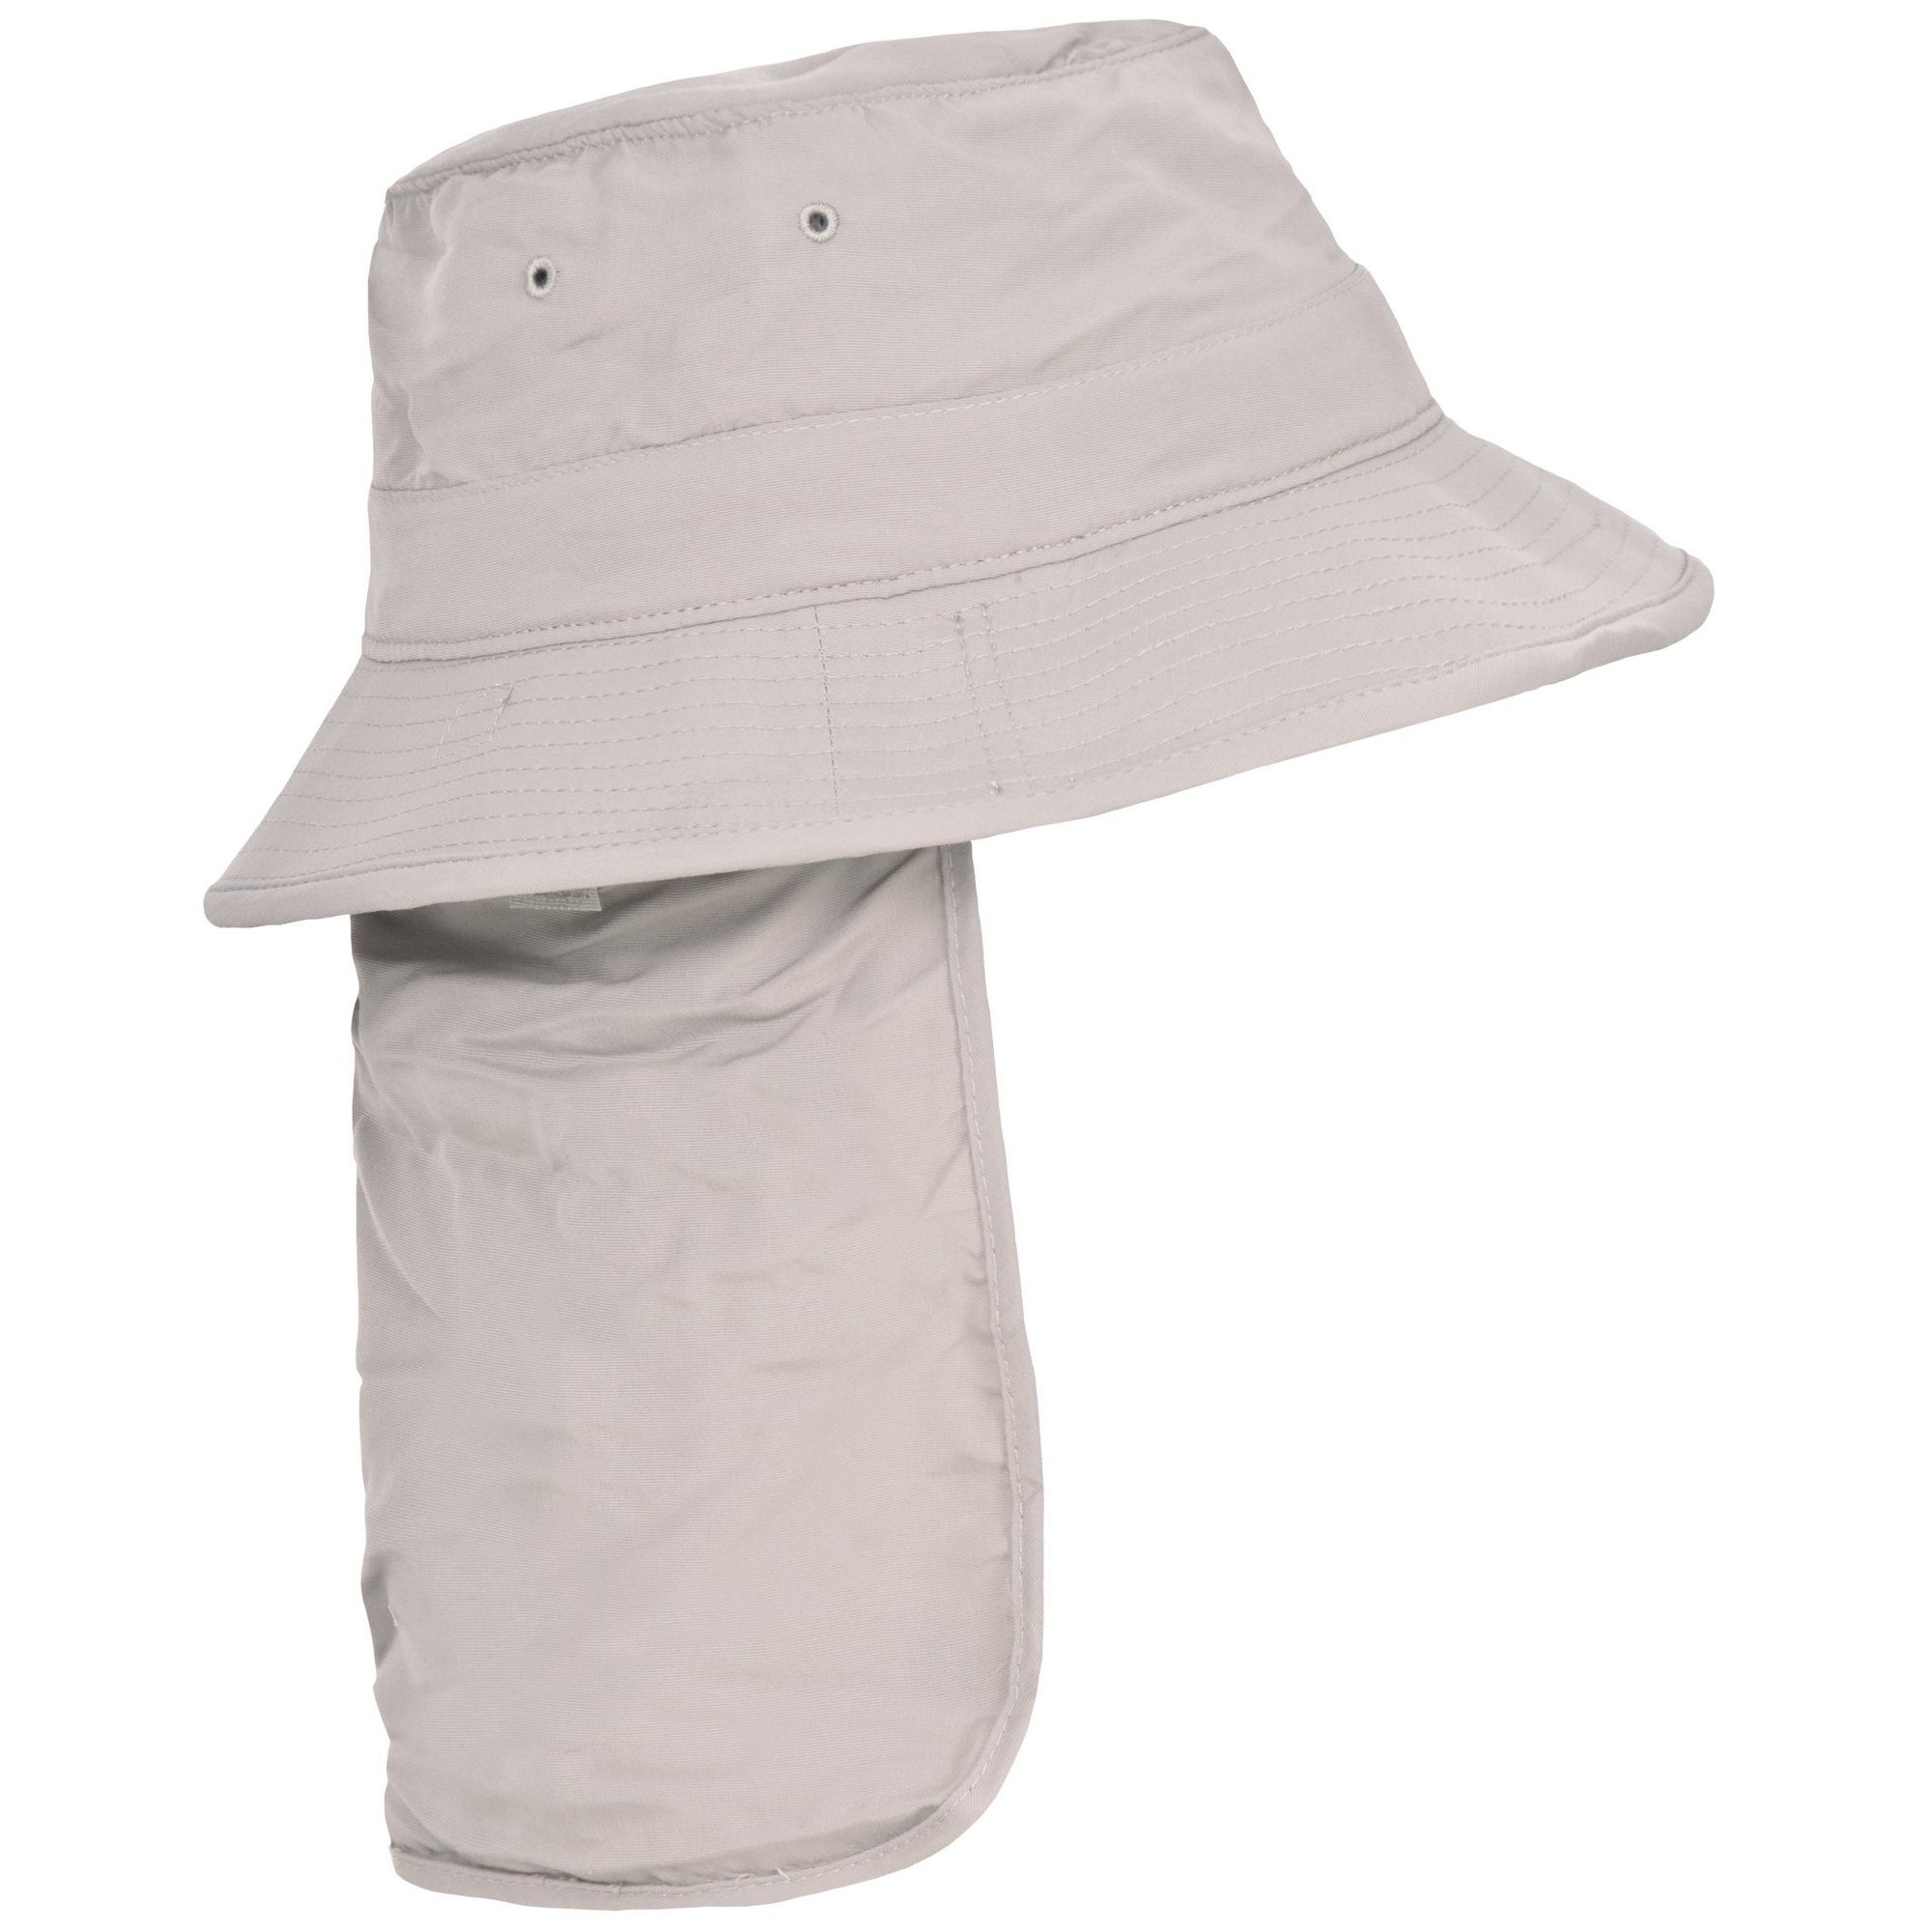 Unisex bucket hat. Foldaway neck protector. Tonal Trespass embroidery. 100% Polyamide. Quick dry. High wicking. UPF 40+.